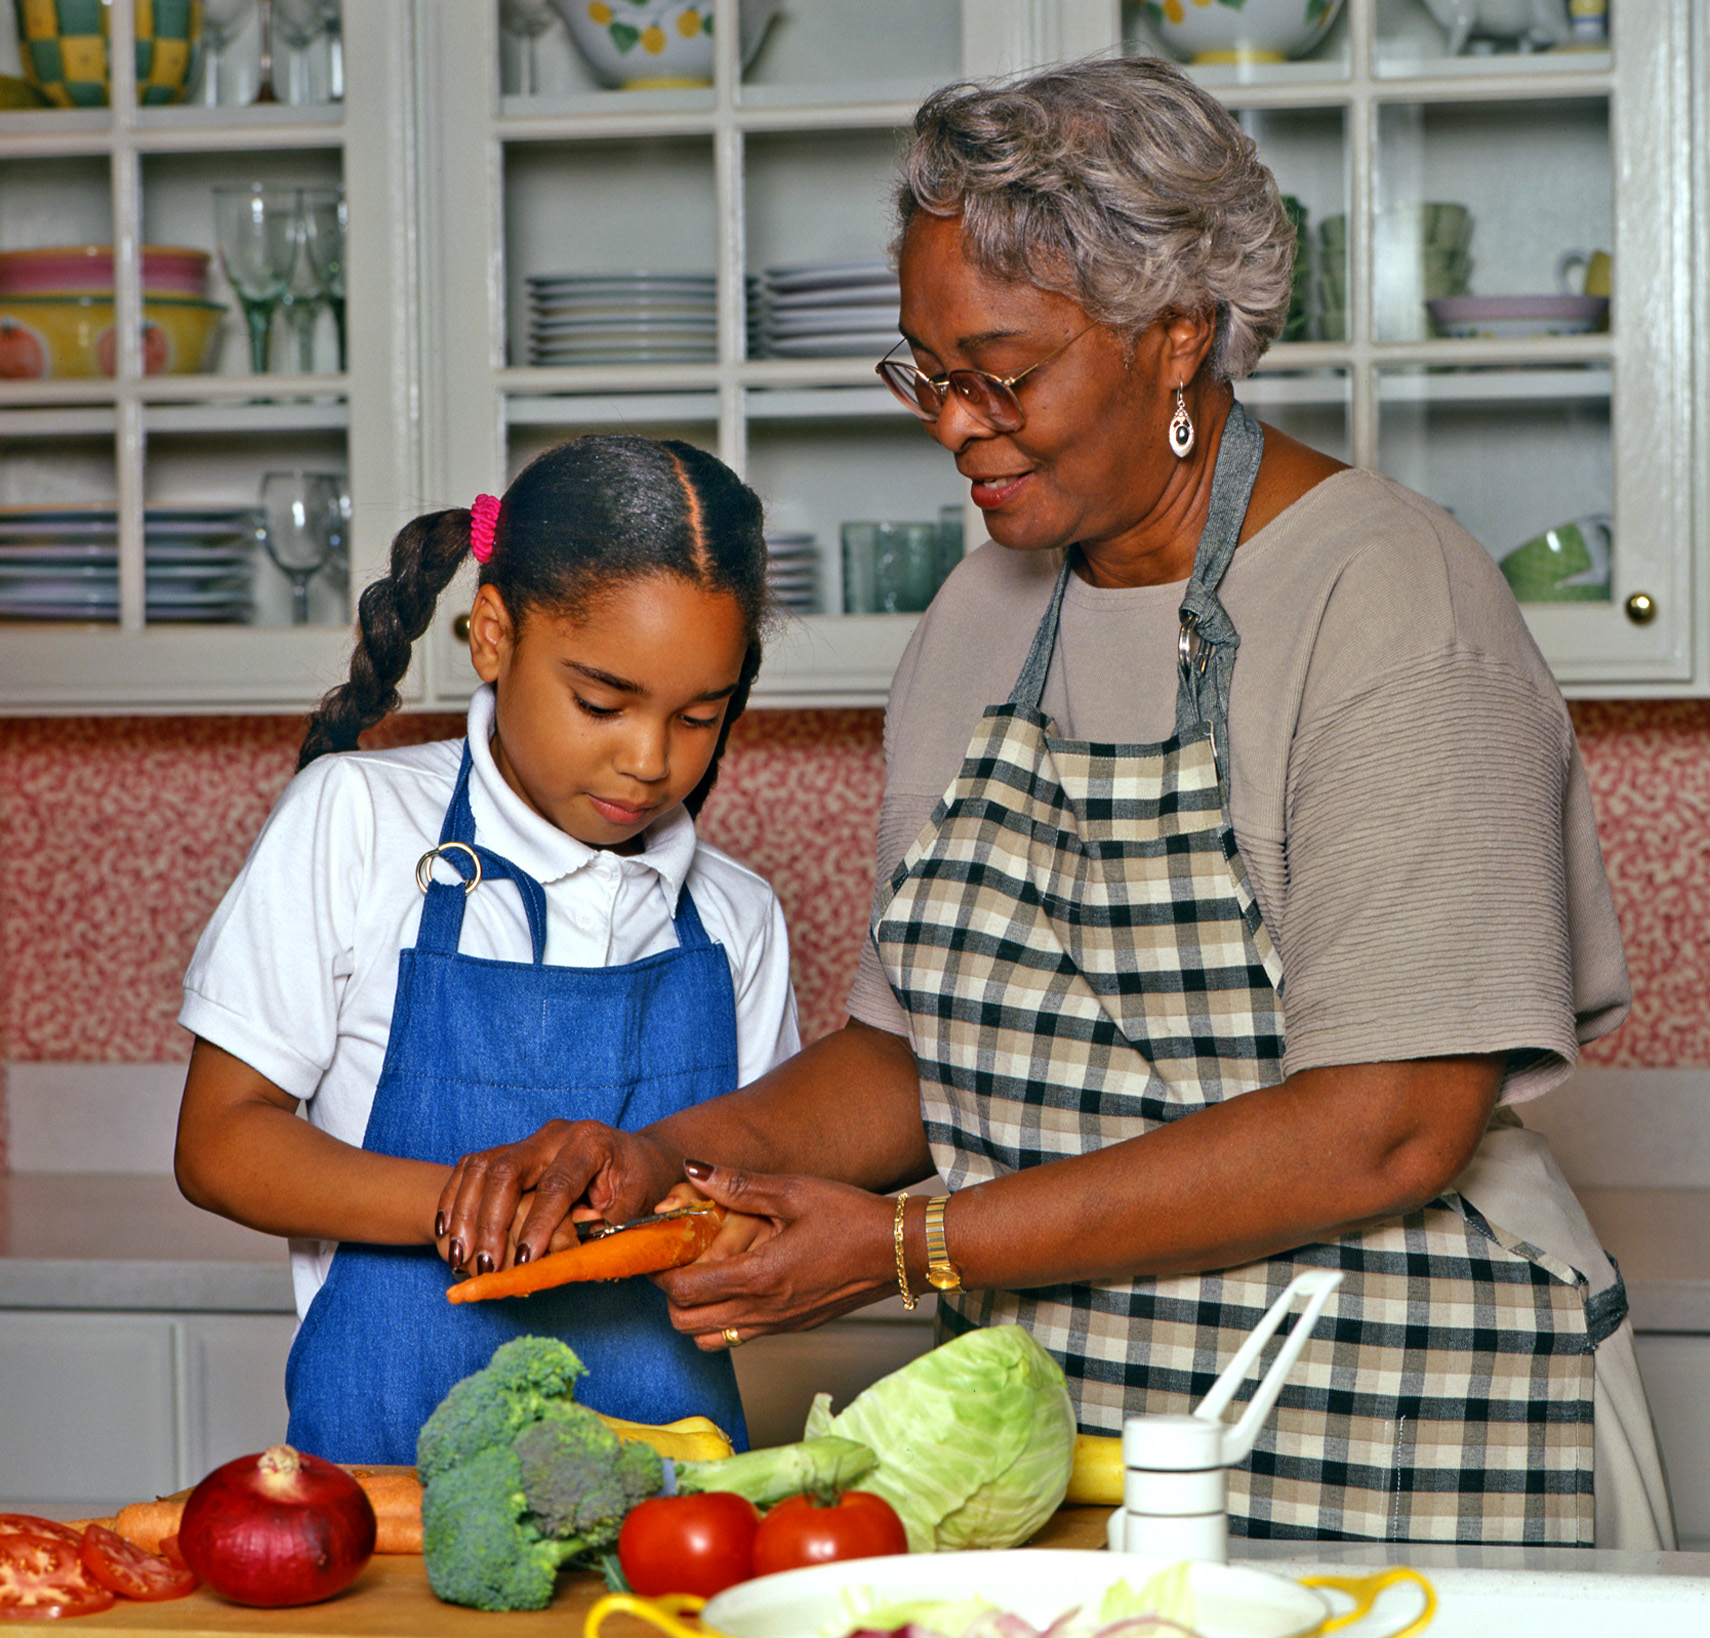 Grandma with Child for APCO Agency Health Brochure